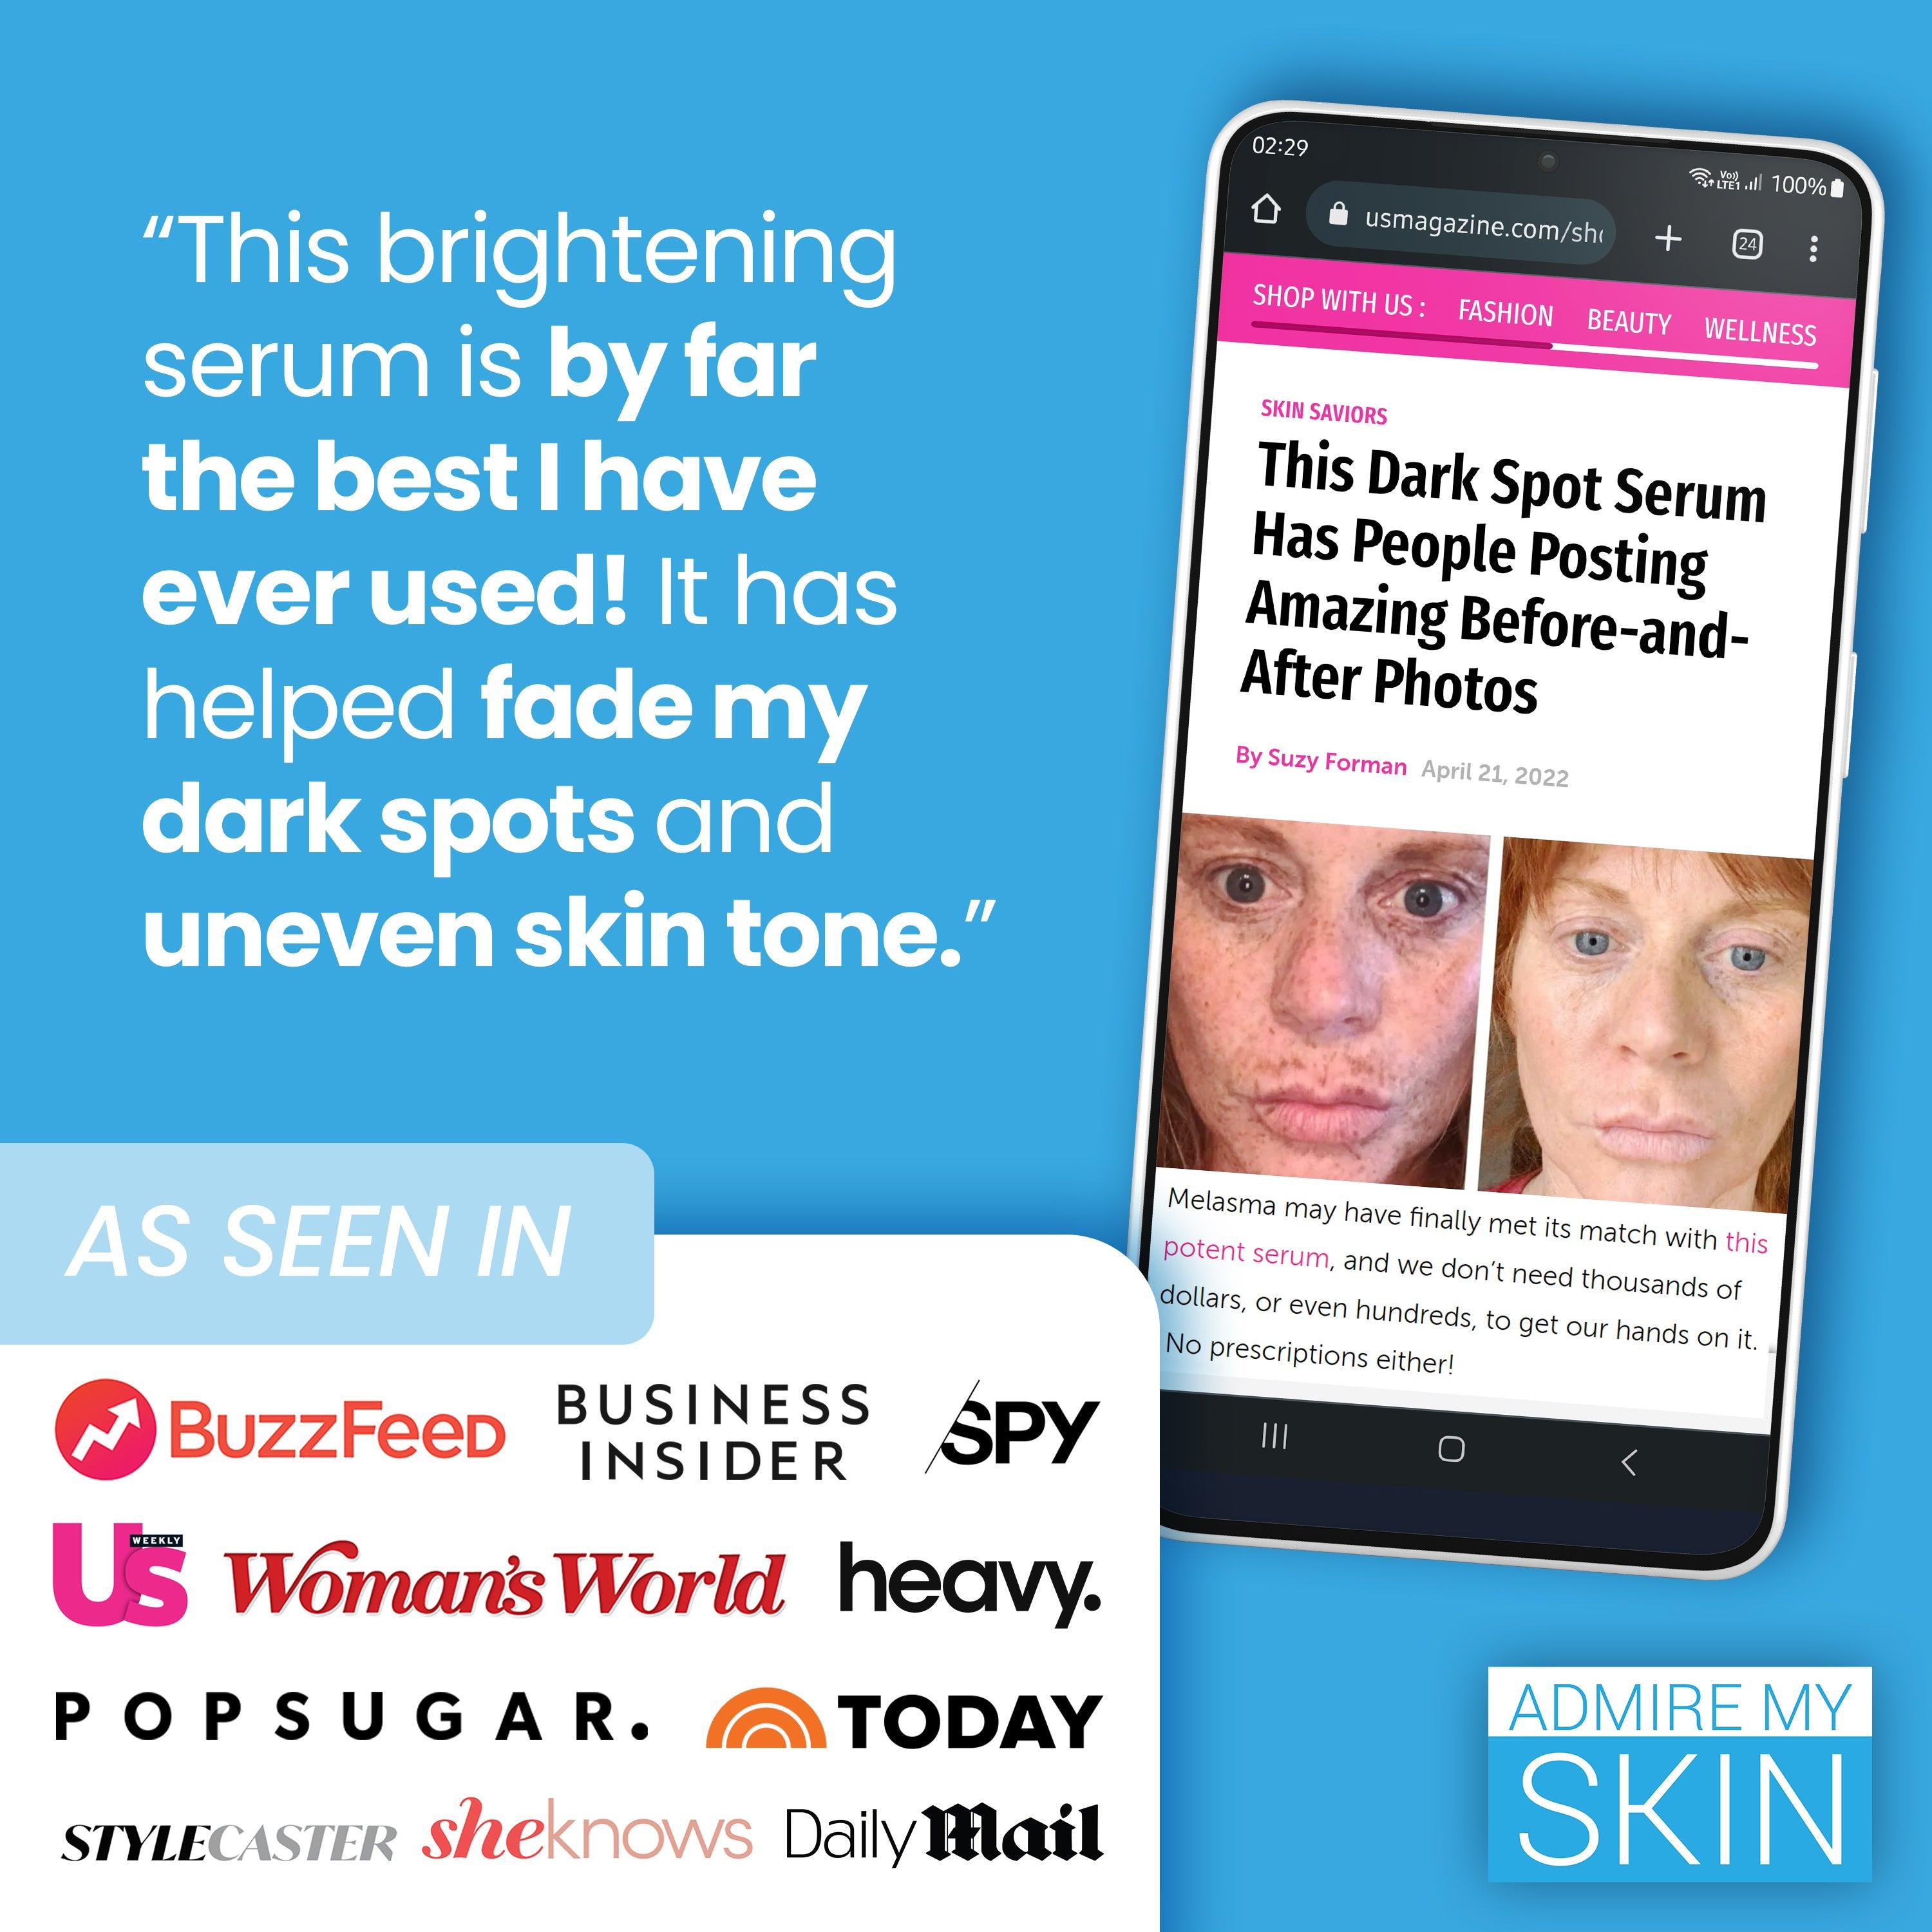 Ultra Potent Brightening Serum For Dark Spots & Uneven Skin Tone - Admire My Skin